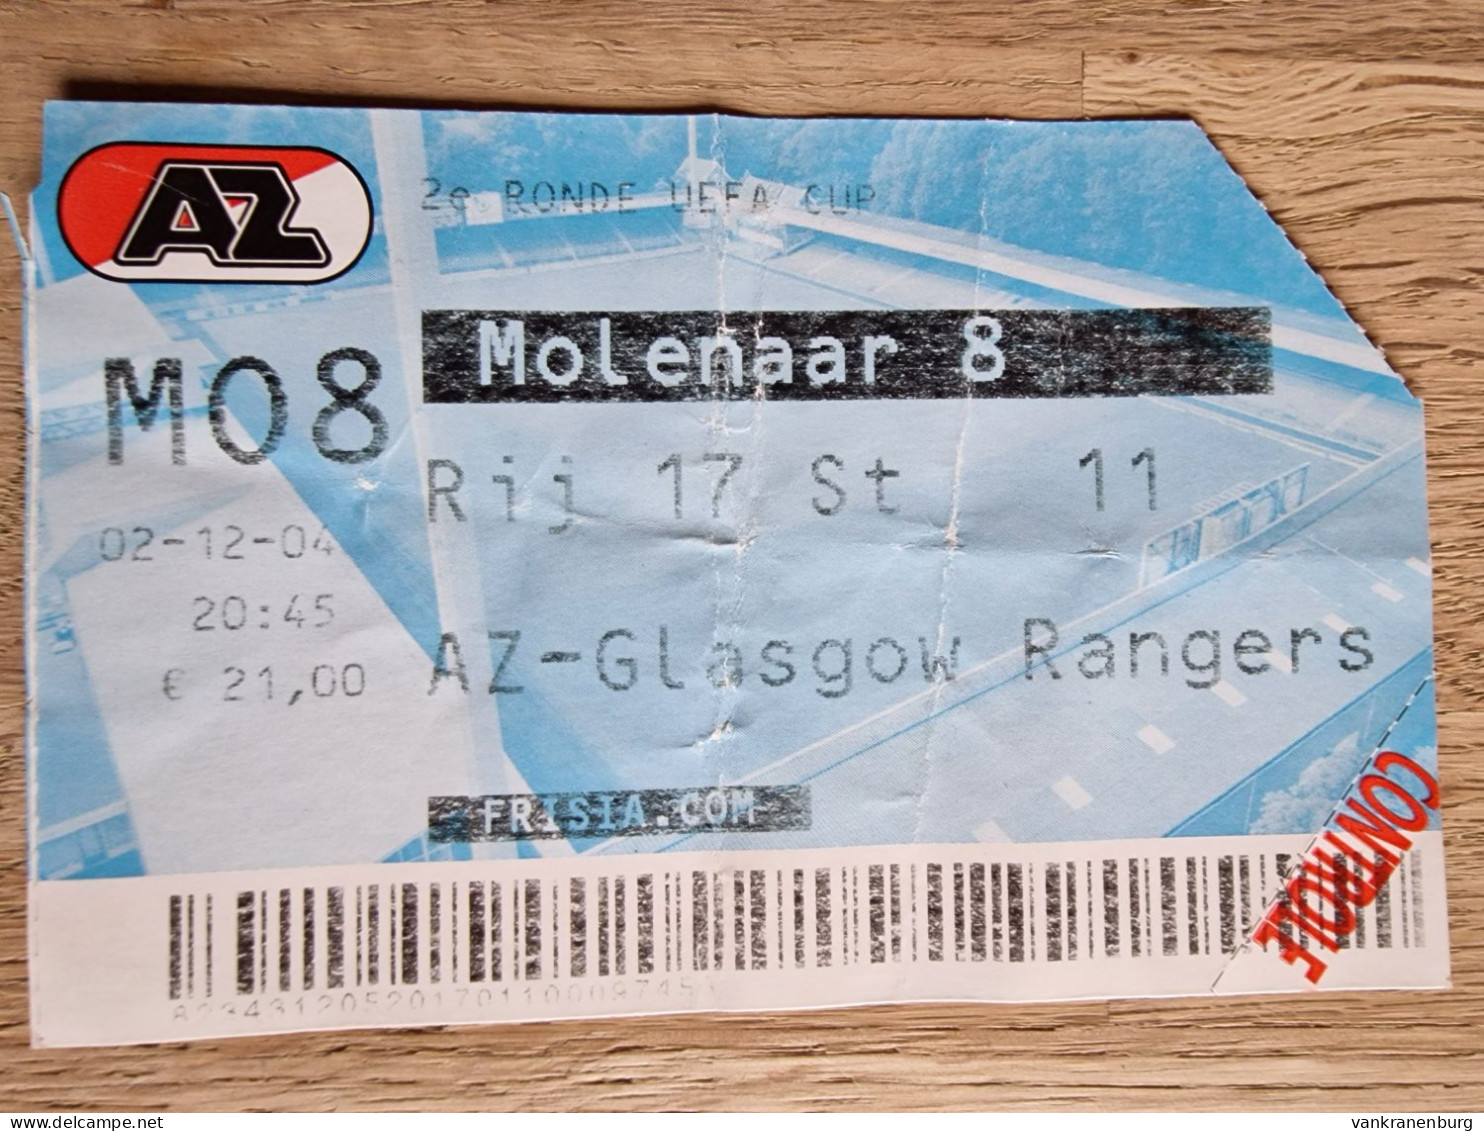 Ticket AZ Alkmaar - Glasgow Rangers - 2.12.2004 - UEFA Cup - Football Soccer Fussball Calcio - - Tickets D'entrée